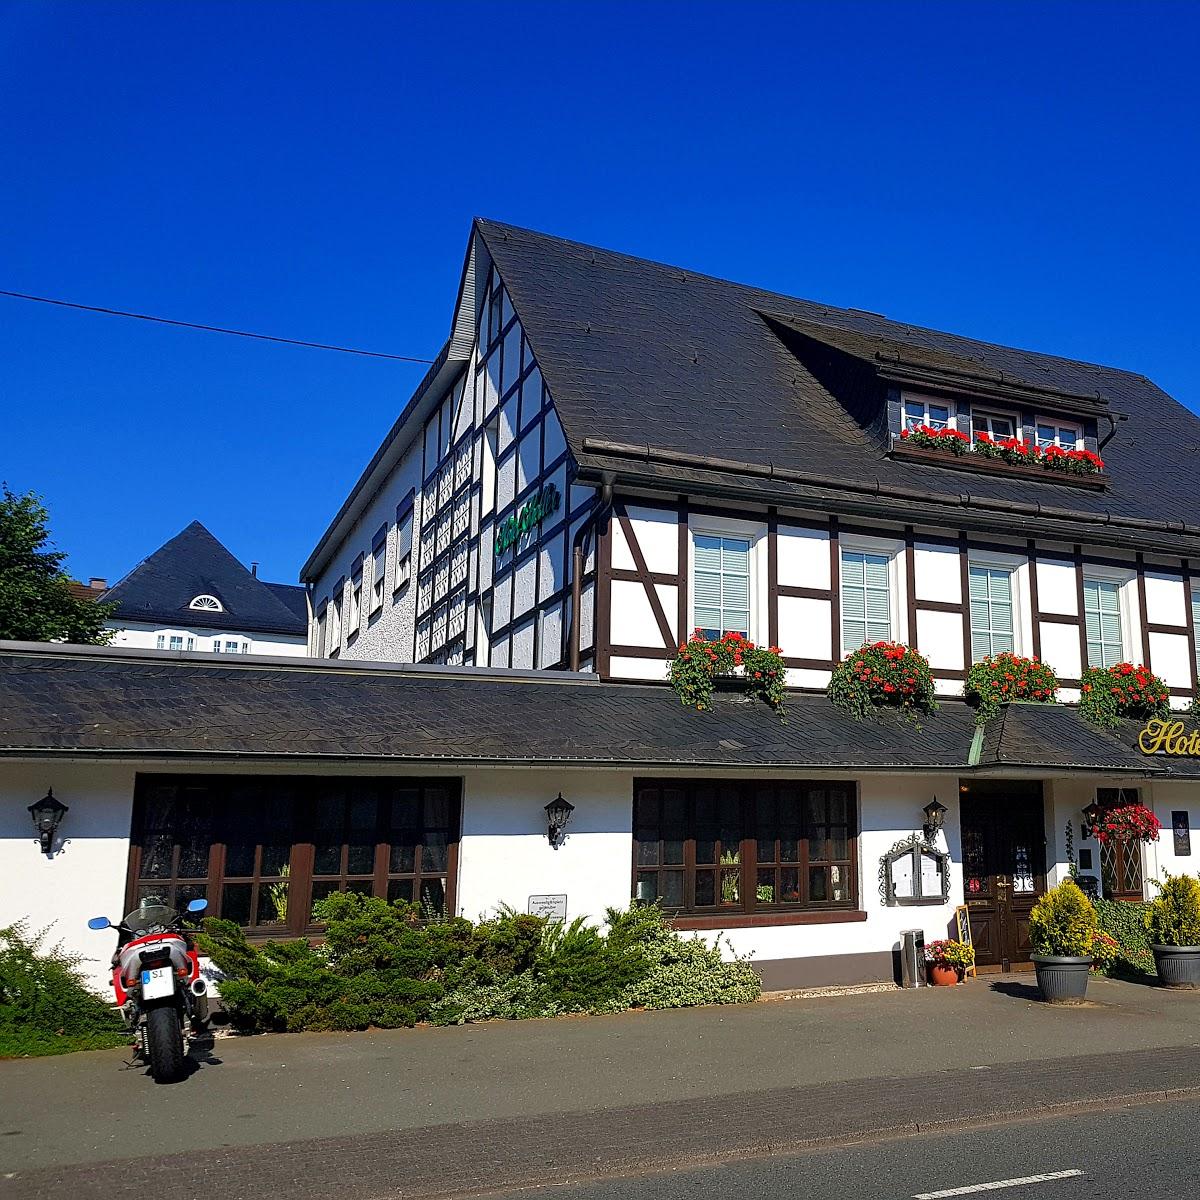 Restaurant "Hotel Keller" in Kreuztal